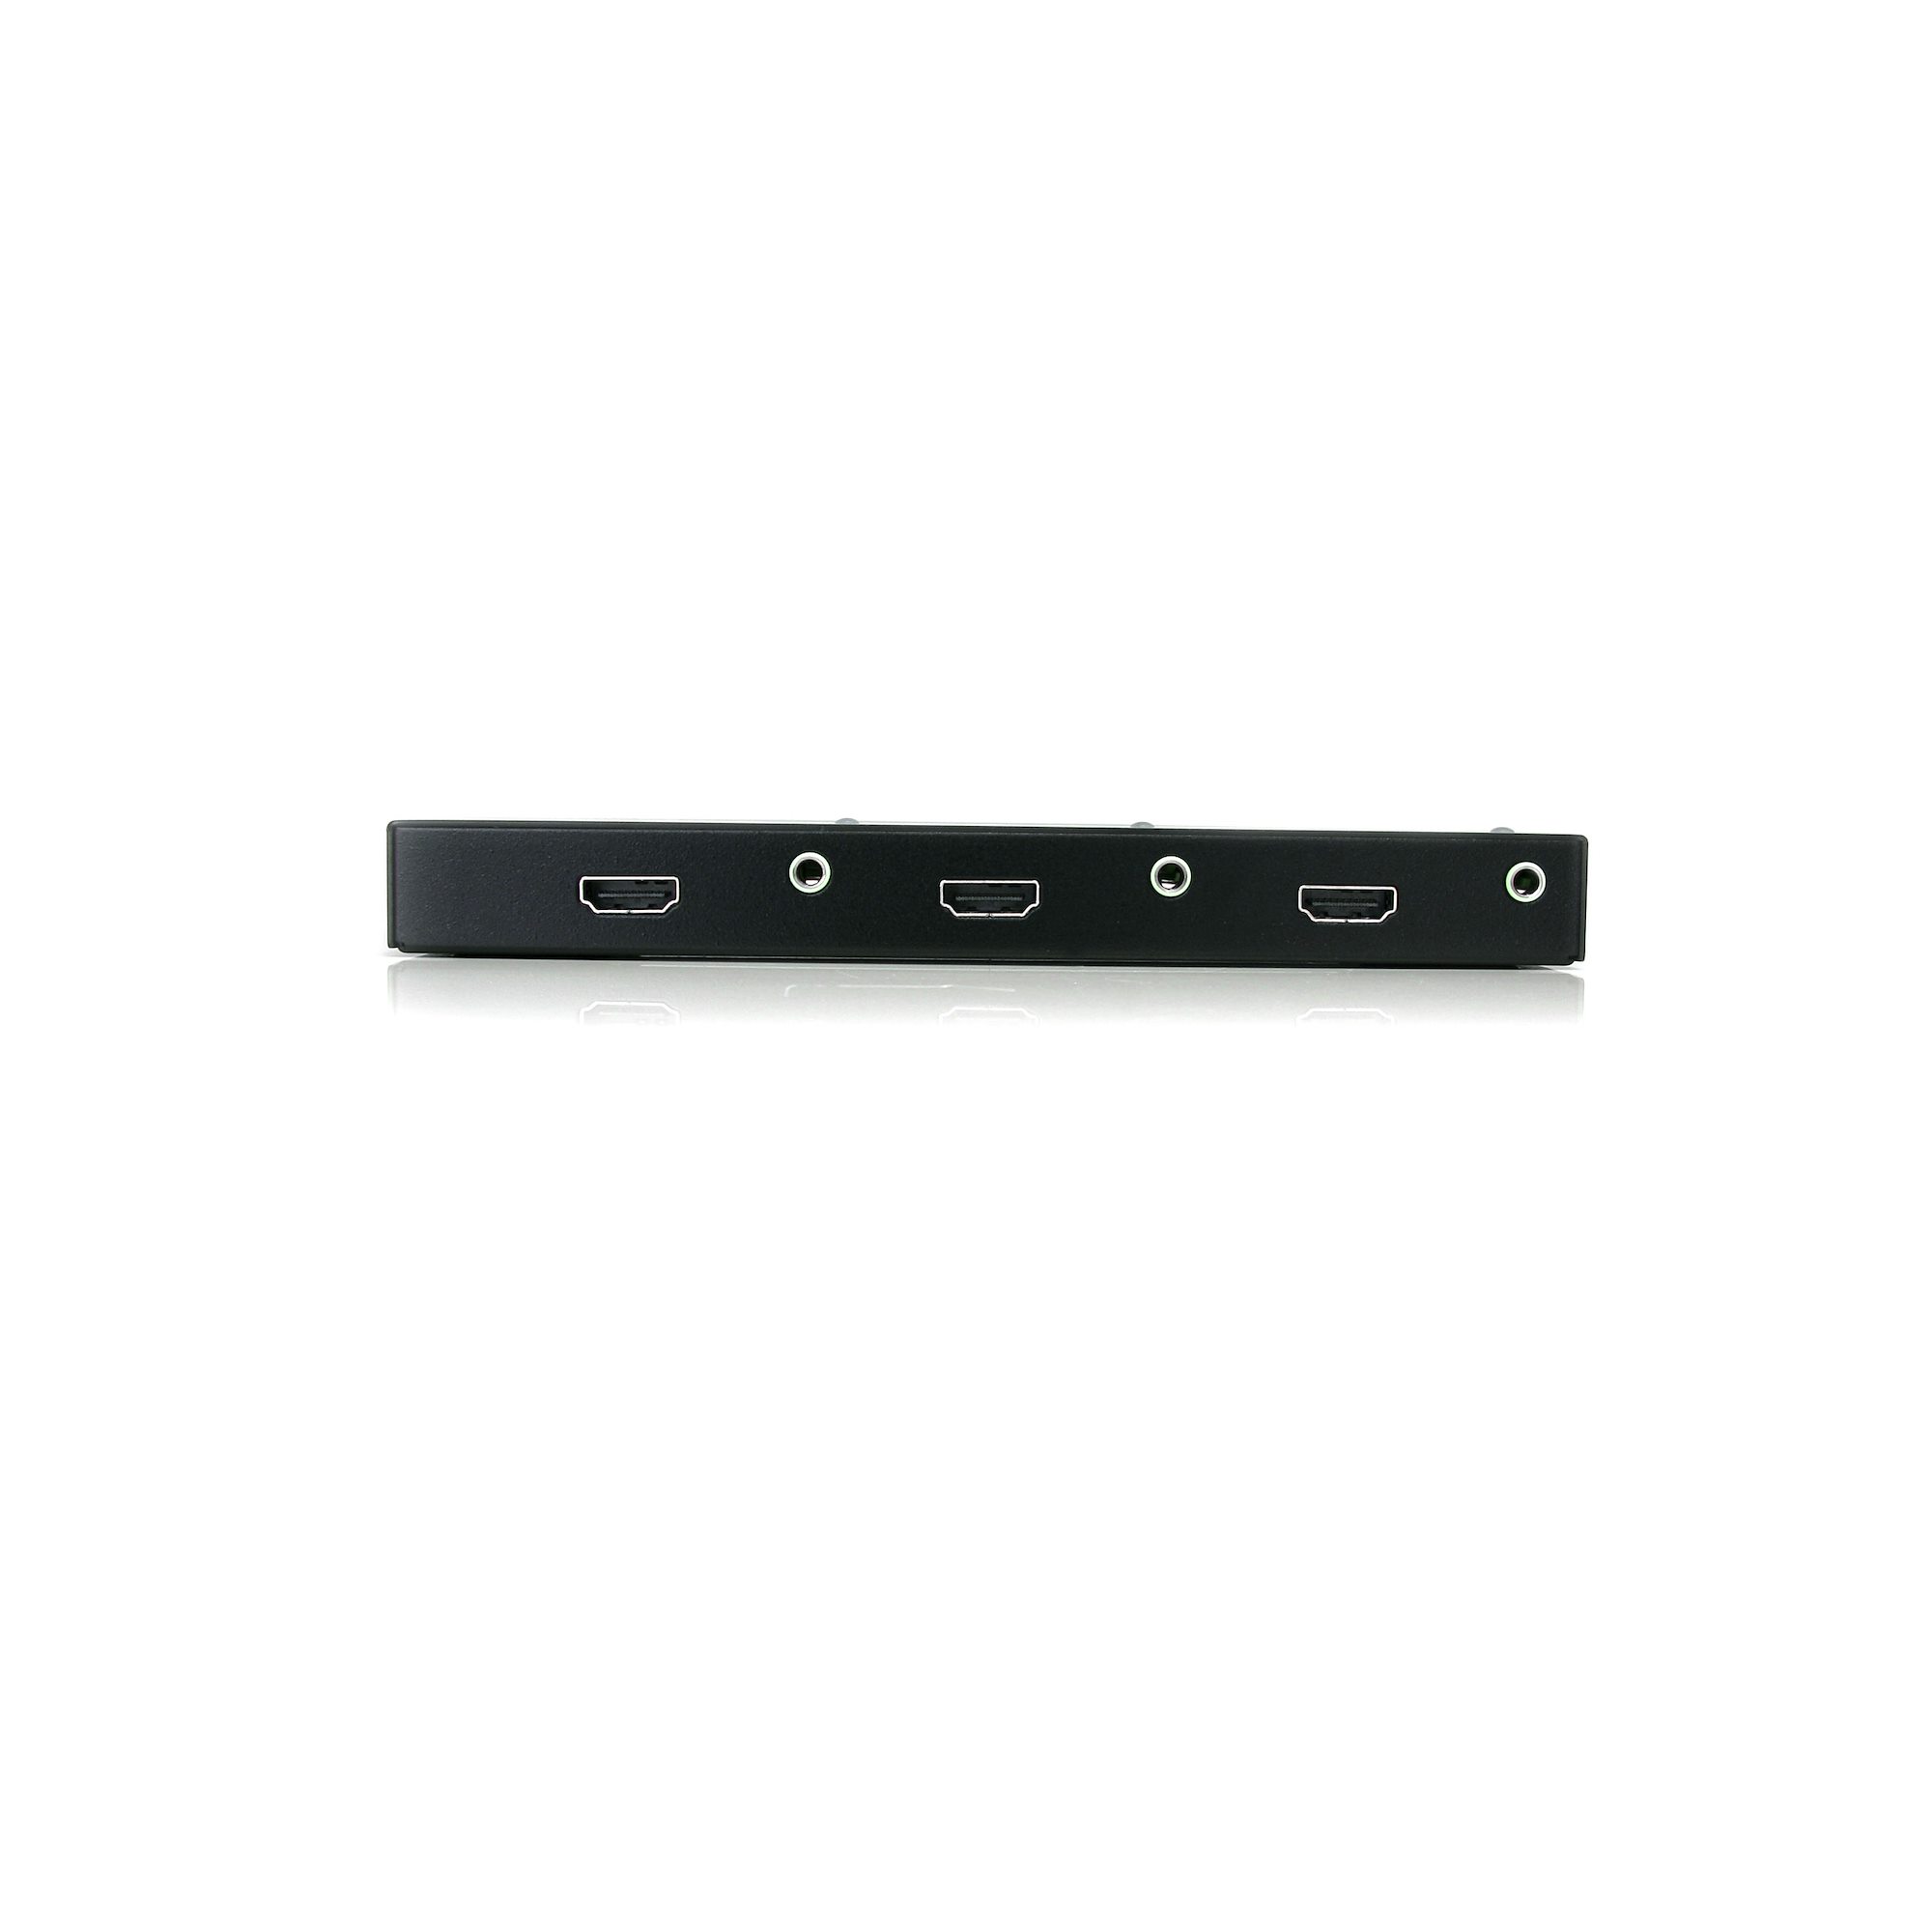 ST ST122HDMILE: HDMI splitter, 2 ports, 1080p, USB-powered, 15 m at  reichelt elektronik